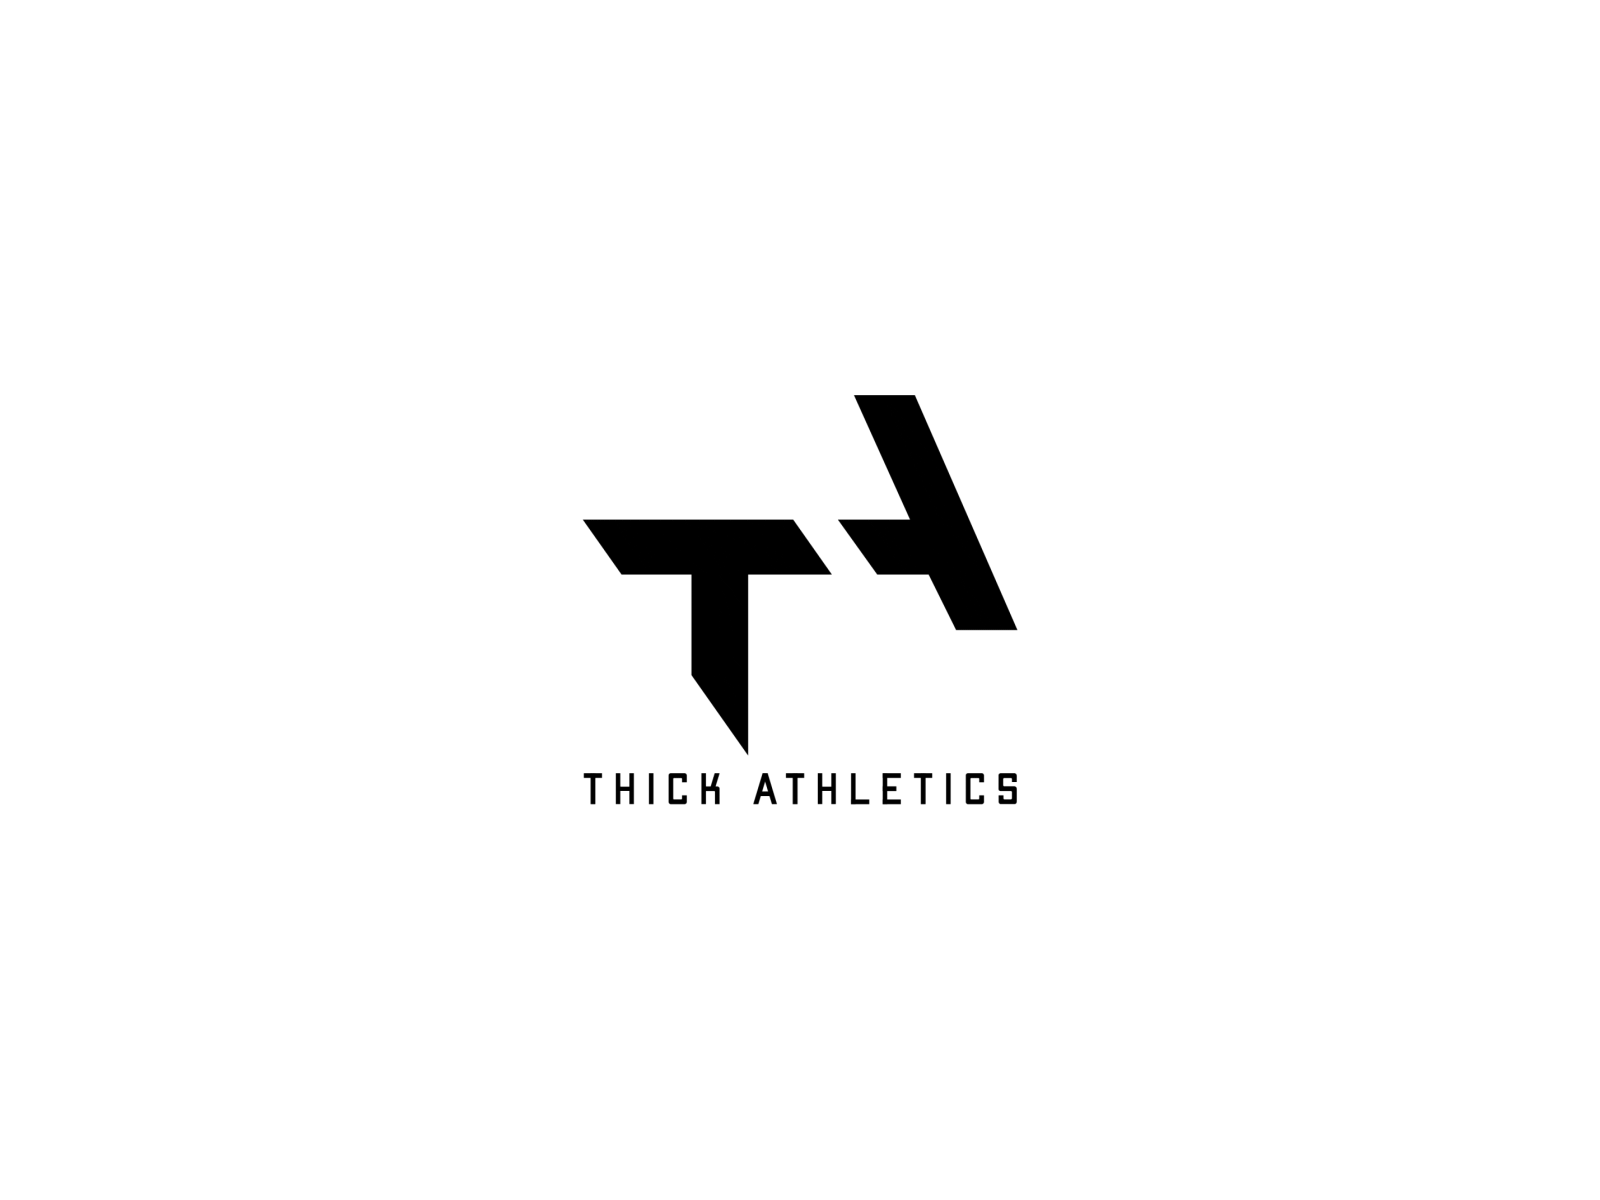 Thick Athletics by Tasja for Moov Studio on Dribbble